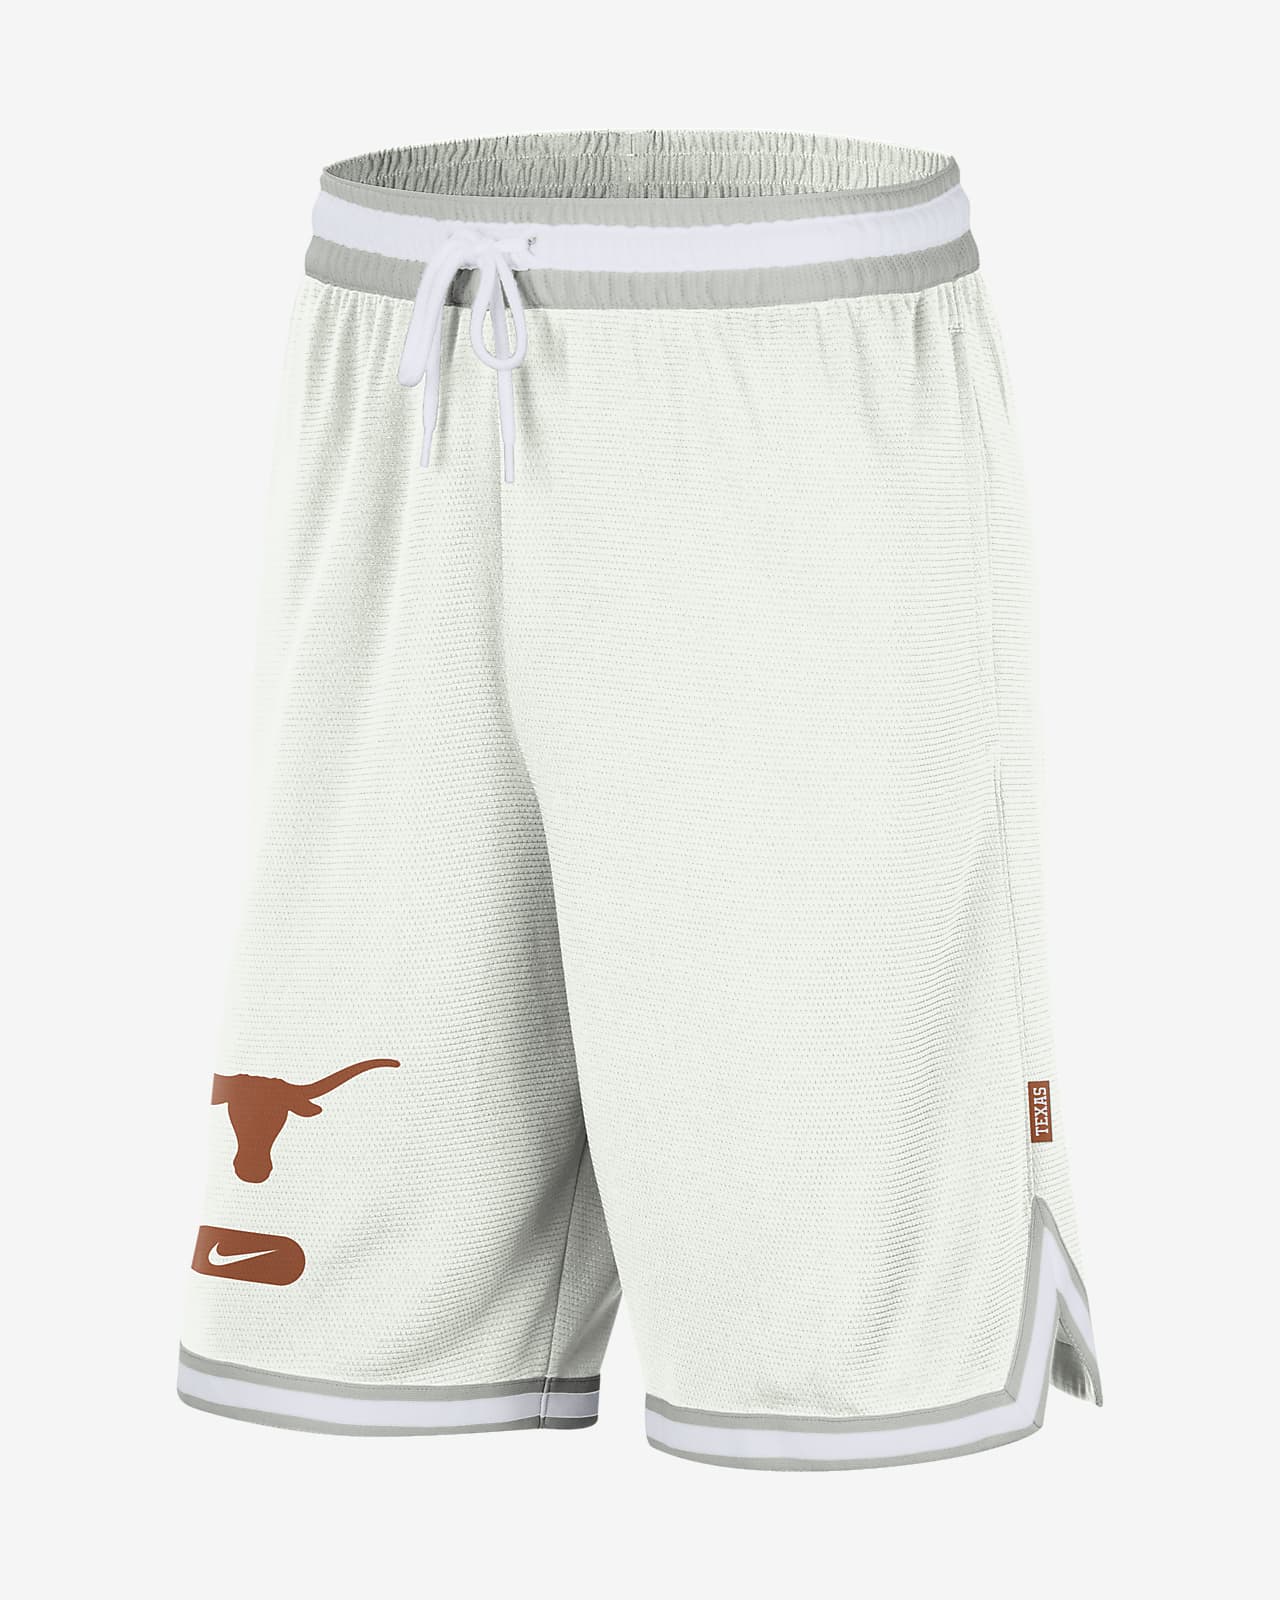 Shorts universitarios Nike Dri-FIT para hombre Texas DNA 3.0